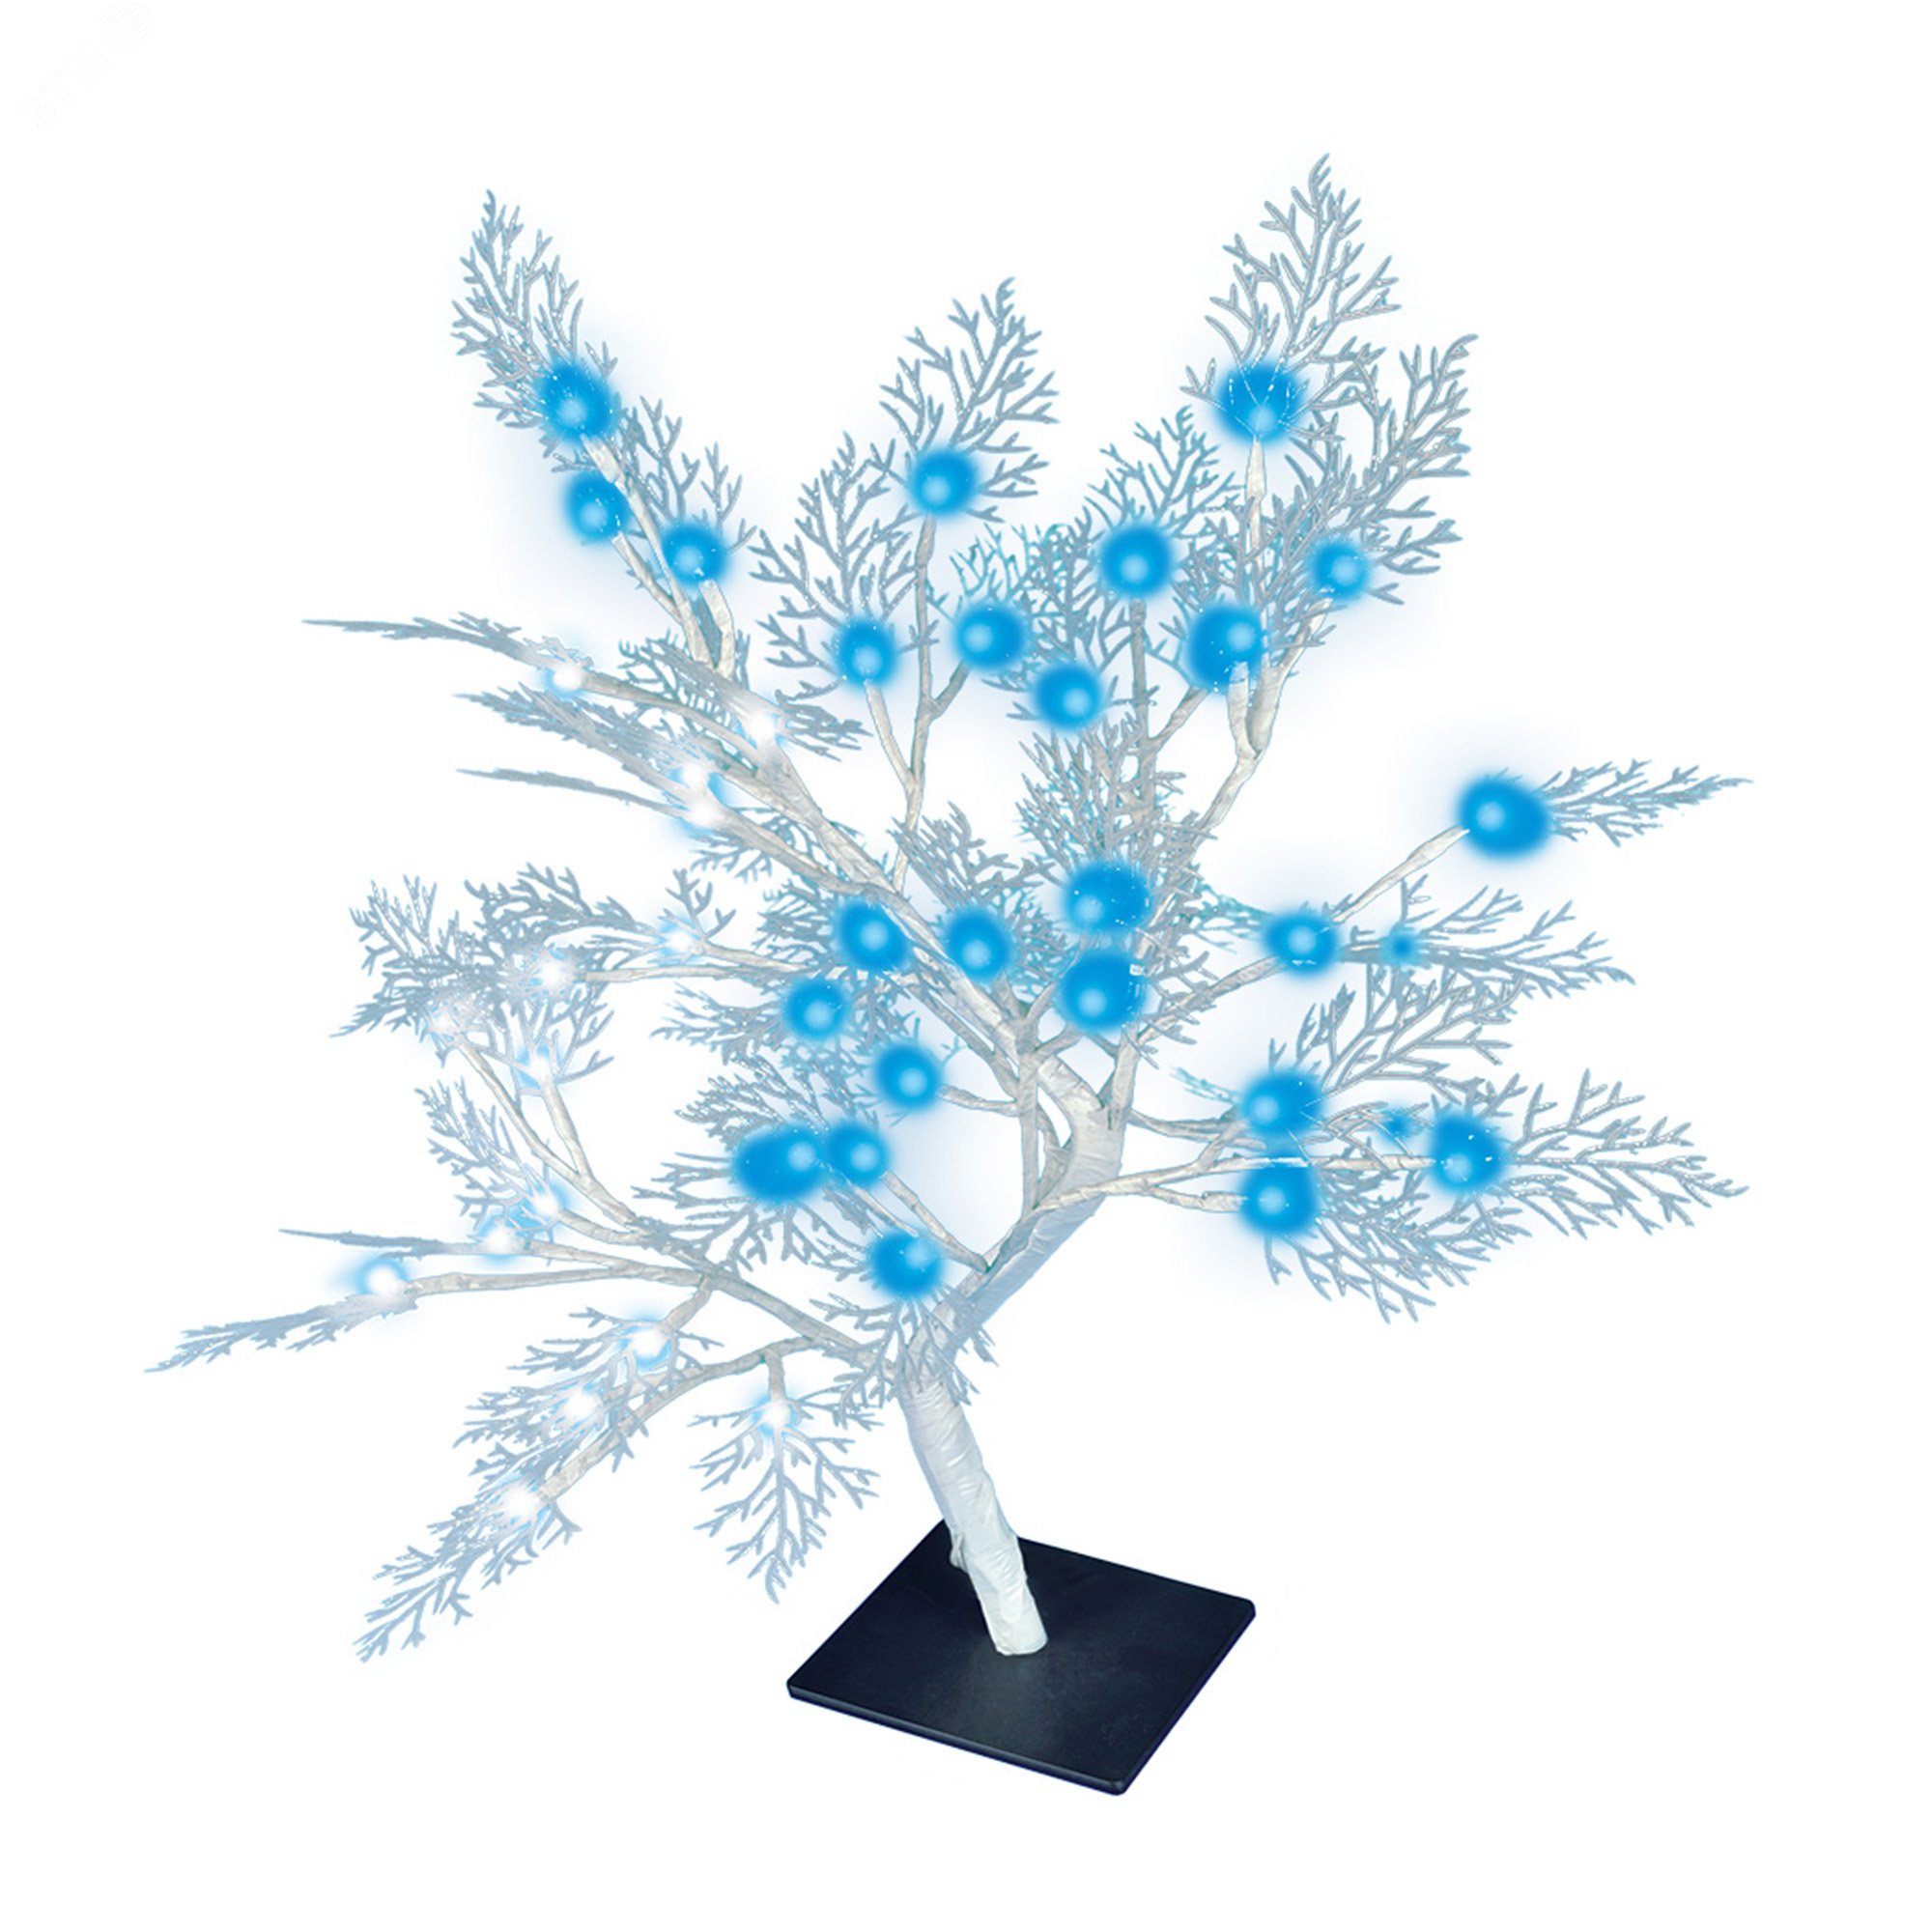 Дерево светодиодное Морозко 50 см 54 светодиода Синий и Провод белый ULD-T3550-054/SWA WHITE-BLUE IP20 FROST UL-00001400 Uniel - превью 4